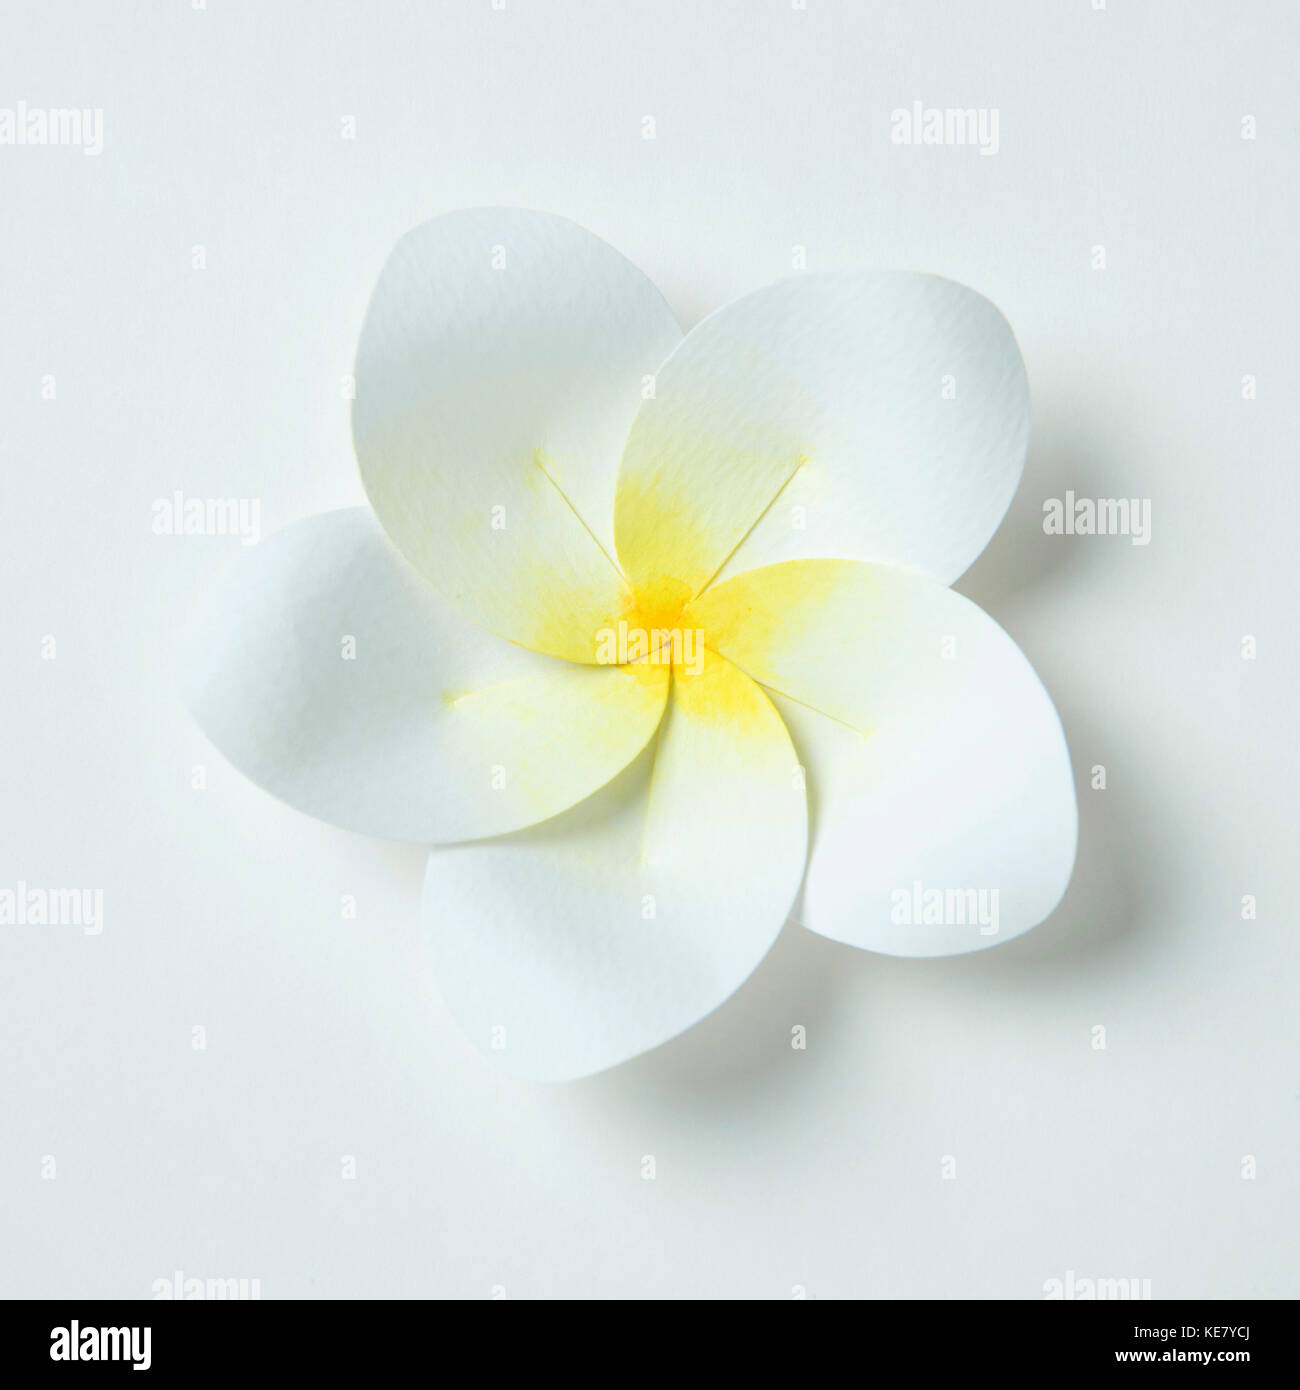 One flower, paper art Stock Photo